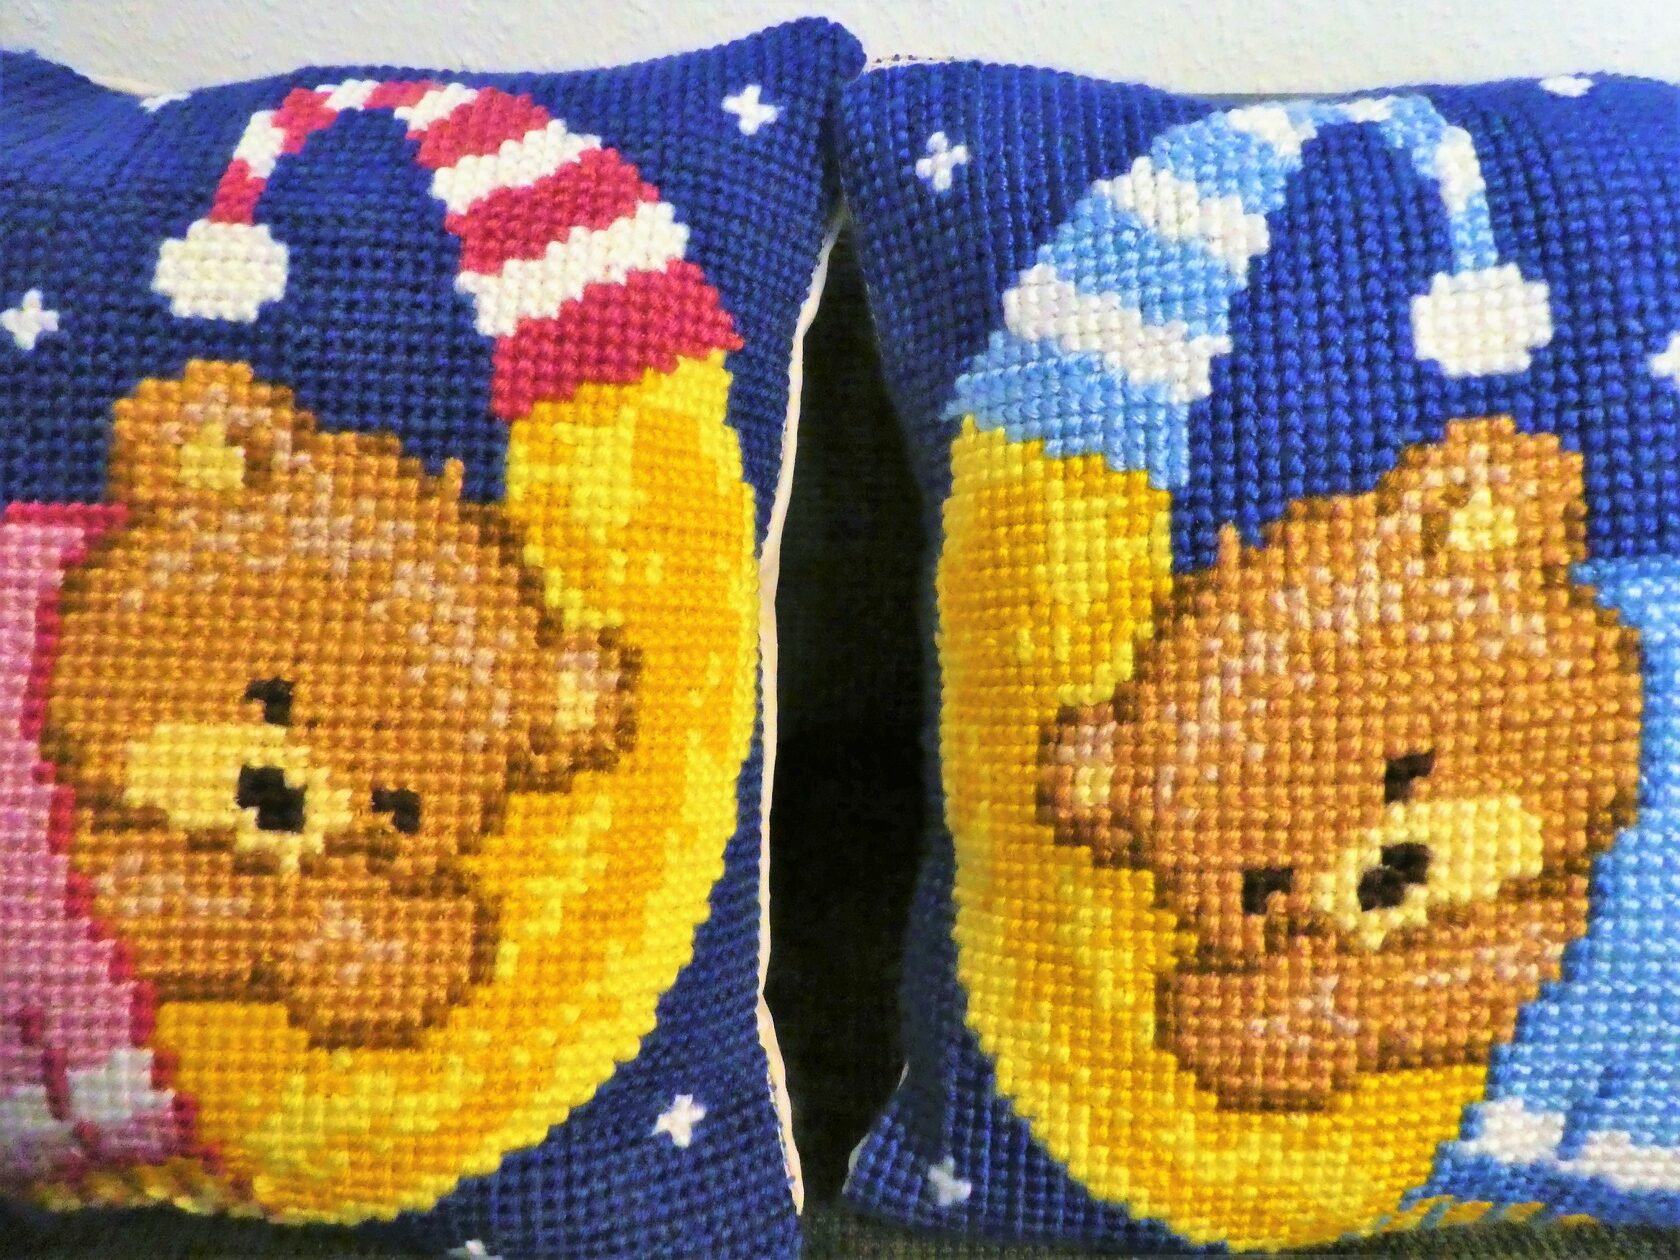 Teddy bears on a moon pillow case handcraft present child room 